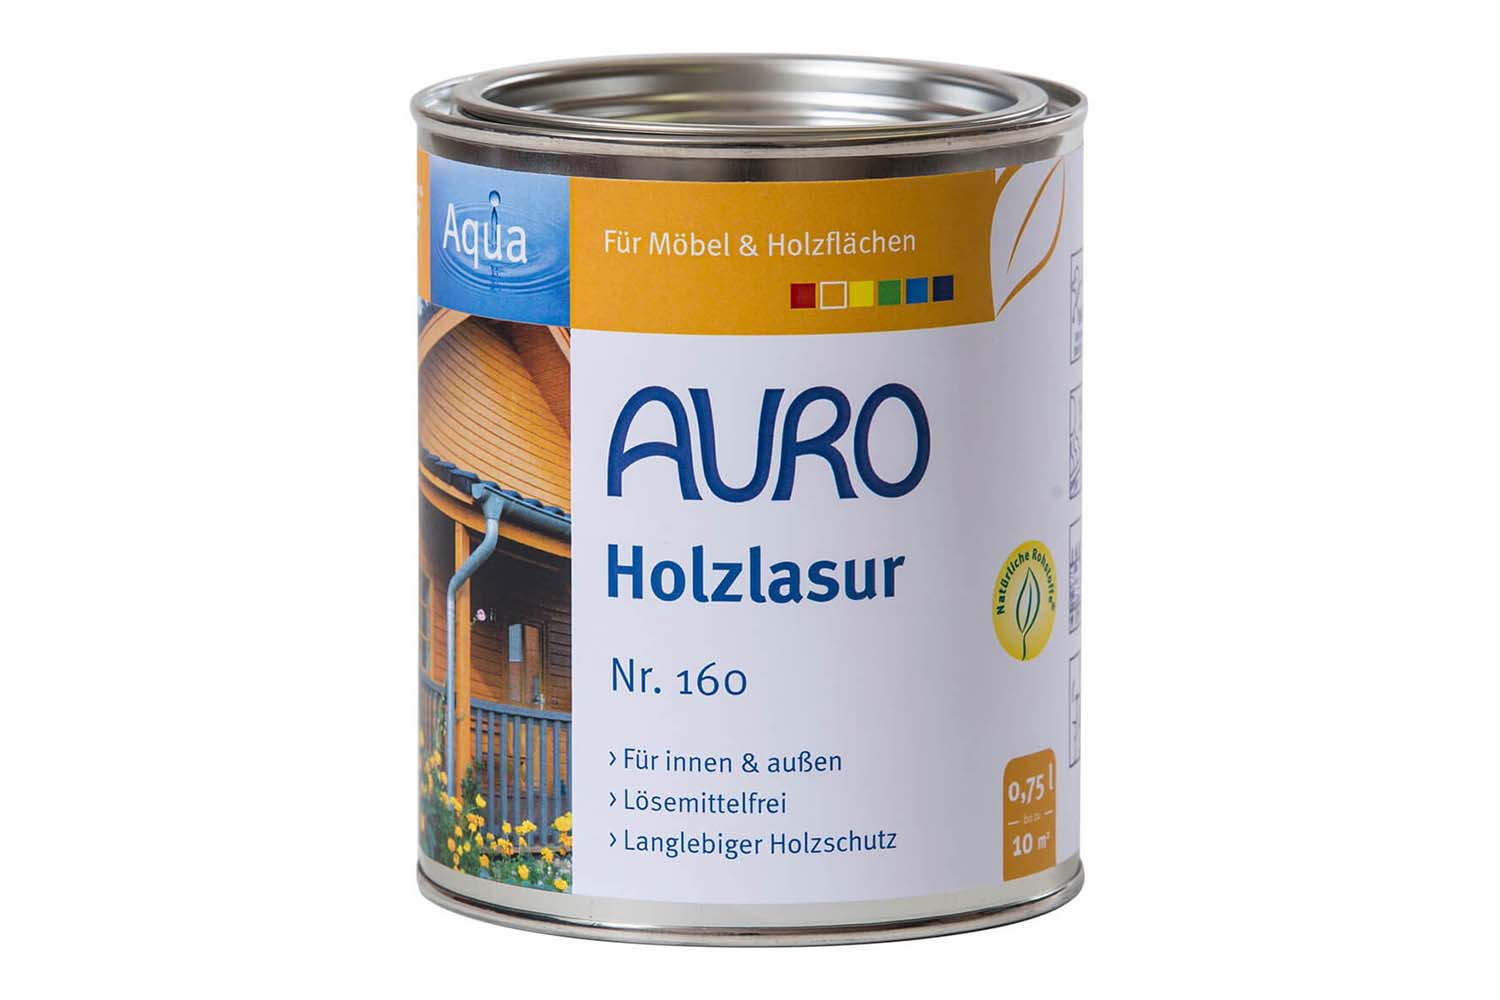 Auro Holzlasur Aqua Nr. 160 - Dunkelrot